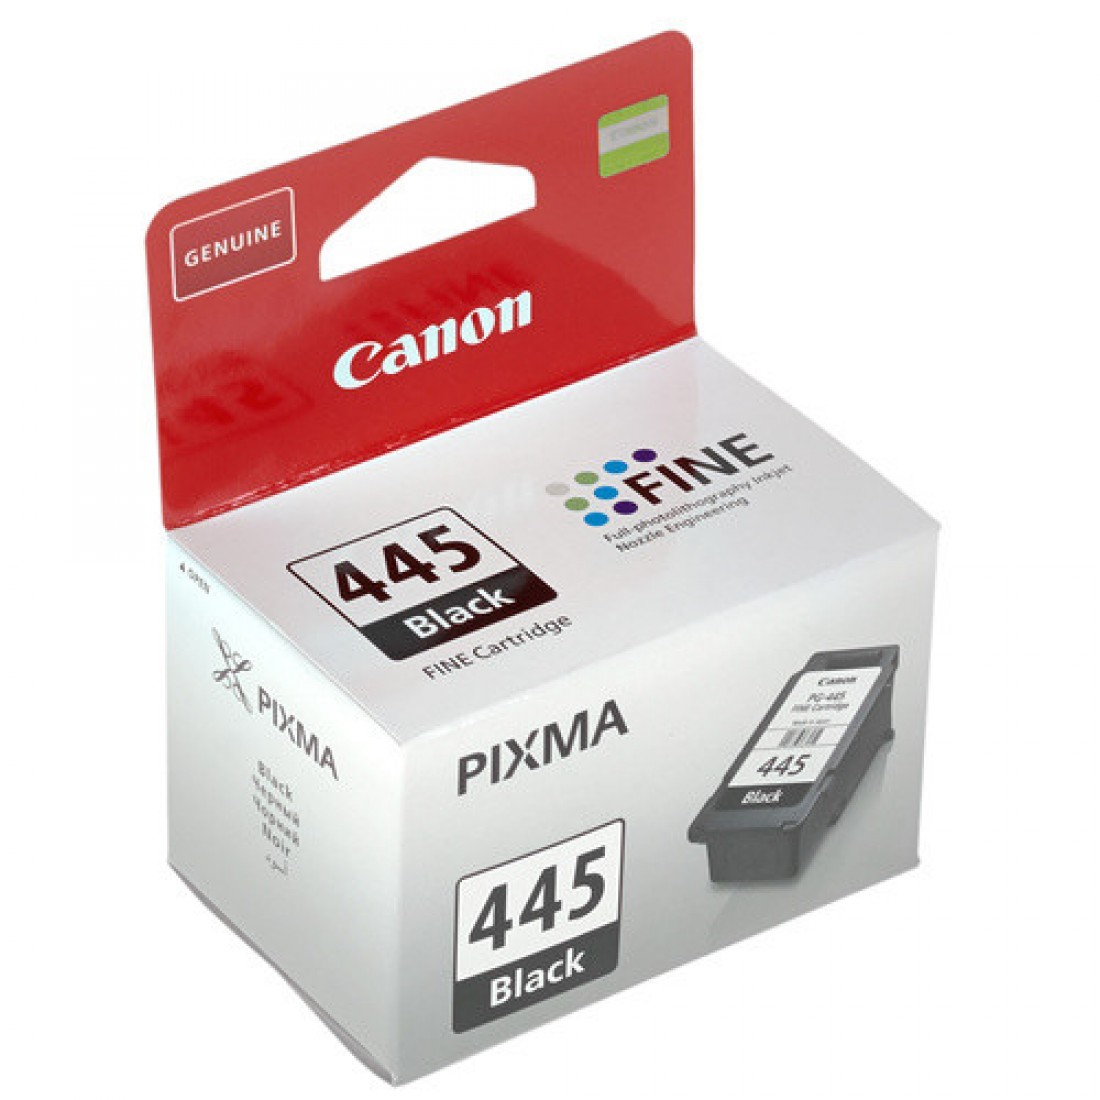 Купить картридж для принтера pg 445. Картридж для принтера Кэнон 445. Картридж для струйного принтера Canon PG-445. Canon PG-445 (8283b001). Canon PIXMA 445 Black.